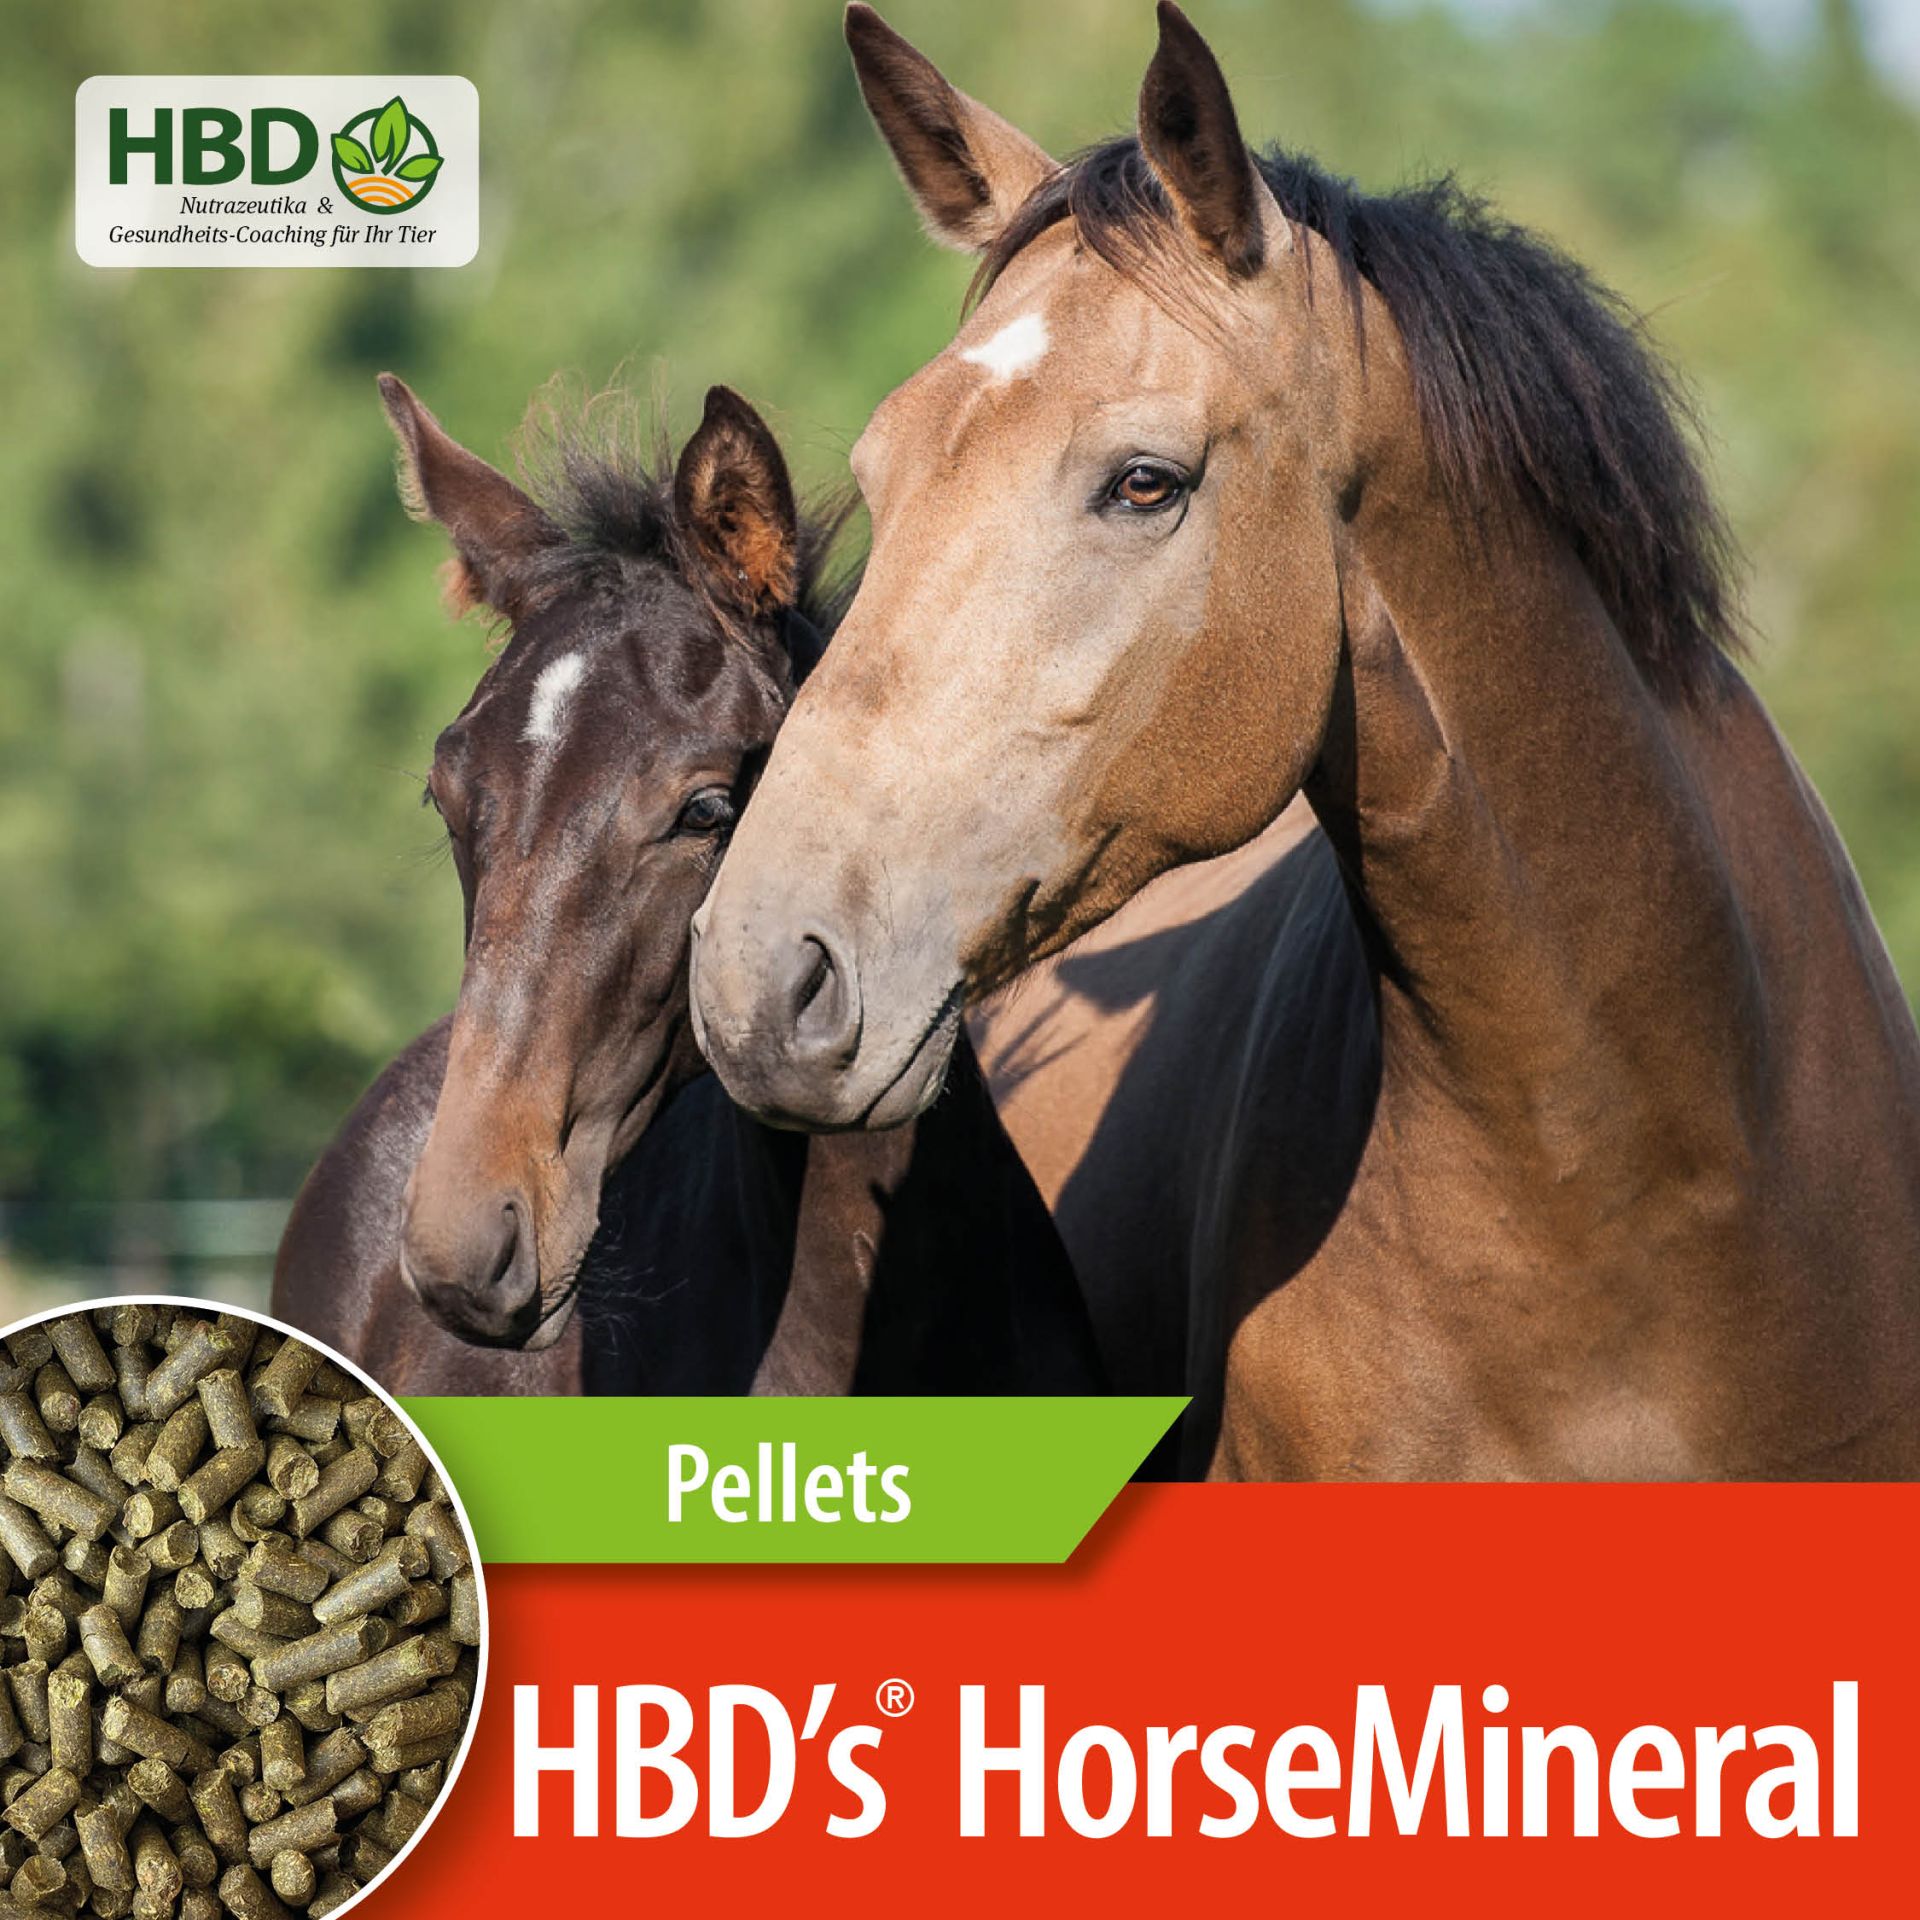 HBD-Agrar - HBD's® HorseMineral - organisch gebundenes Komplettmineralfutter für Pferde